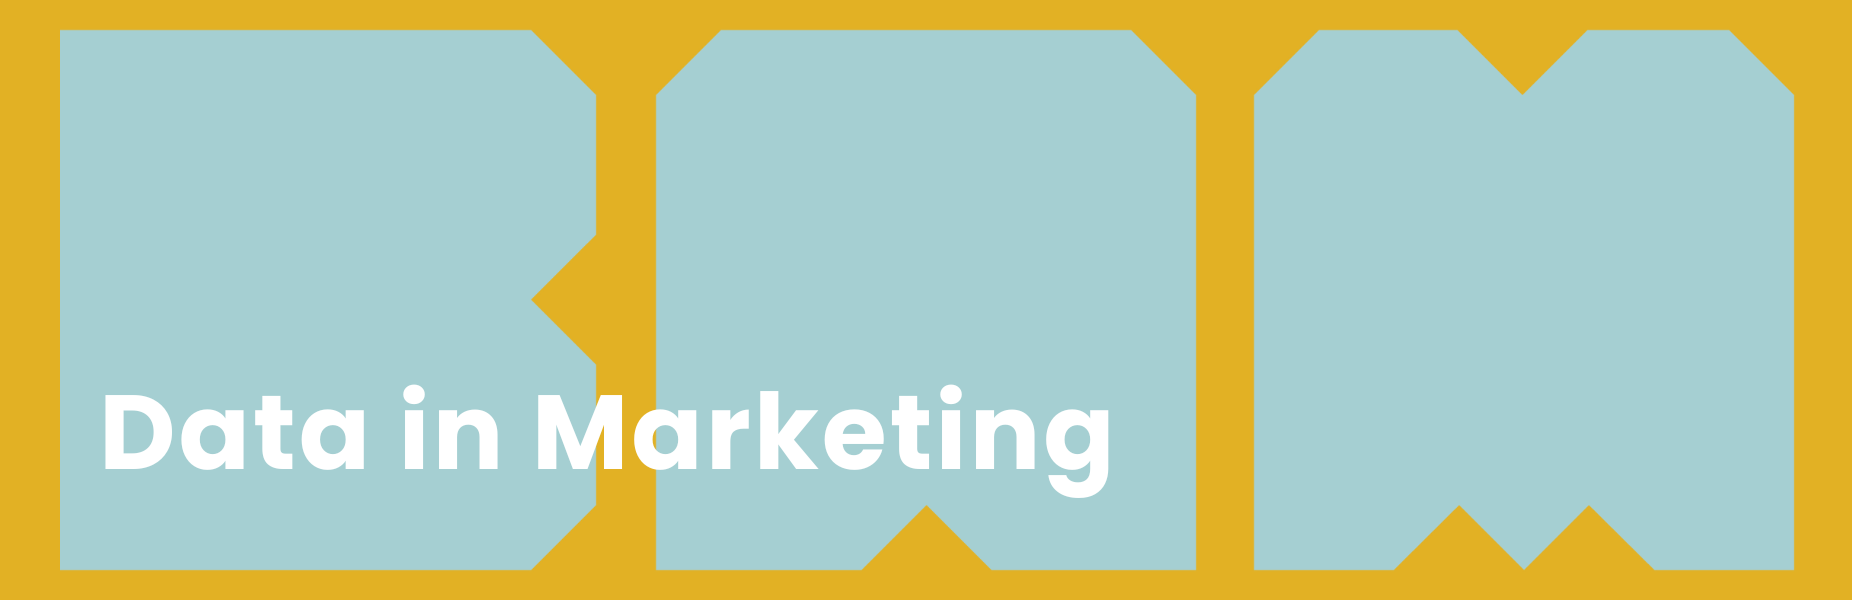 Data in Marketing (2)